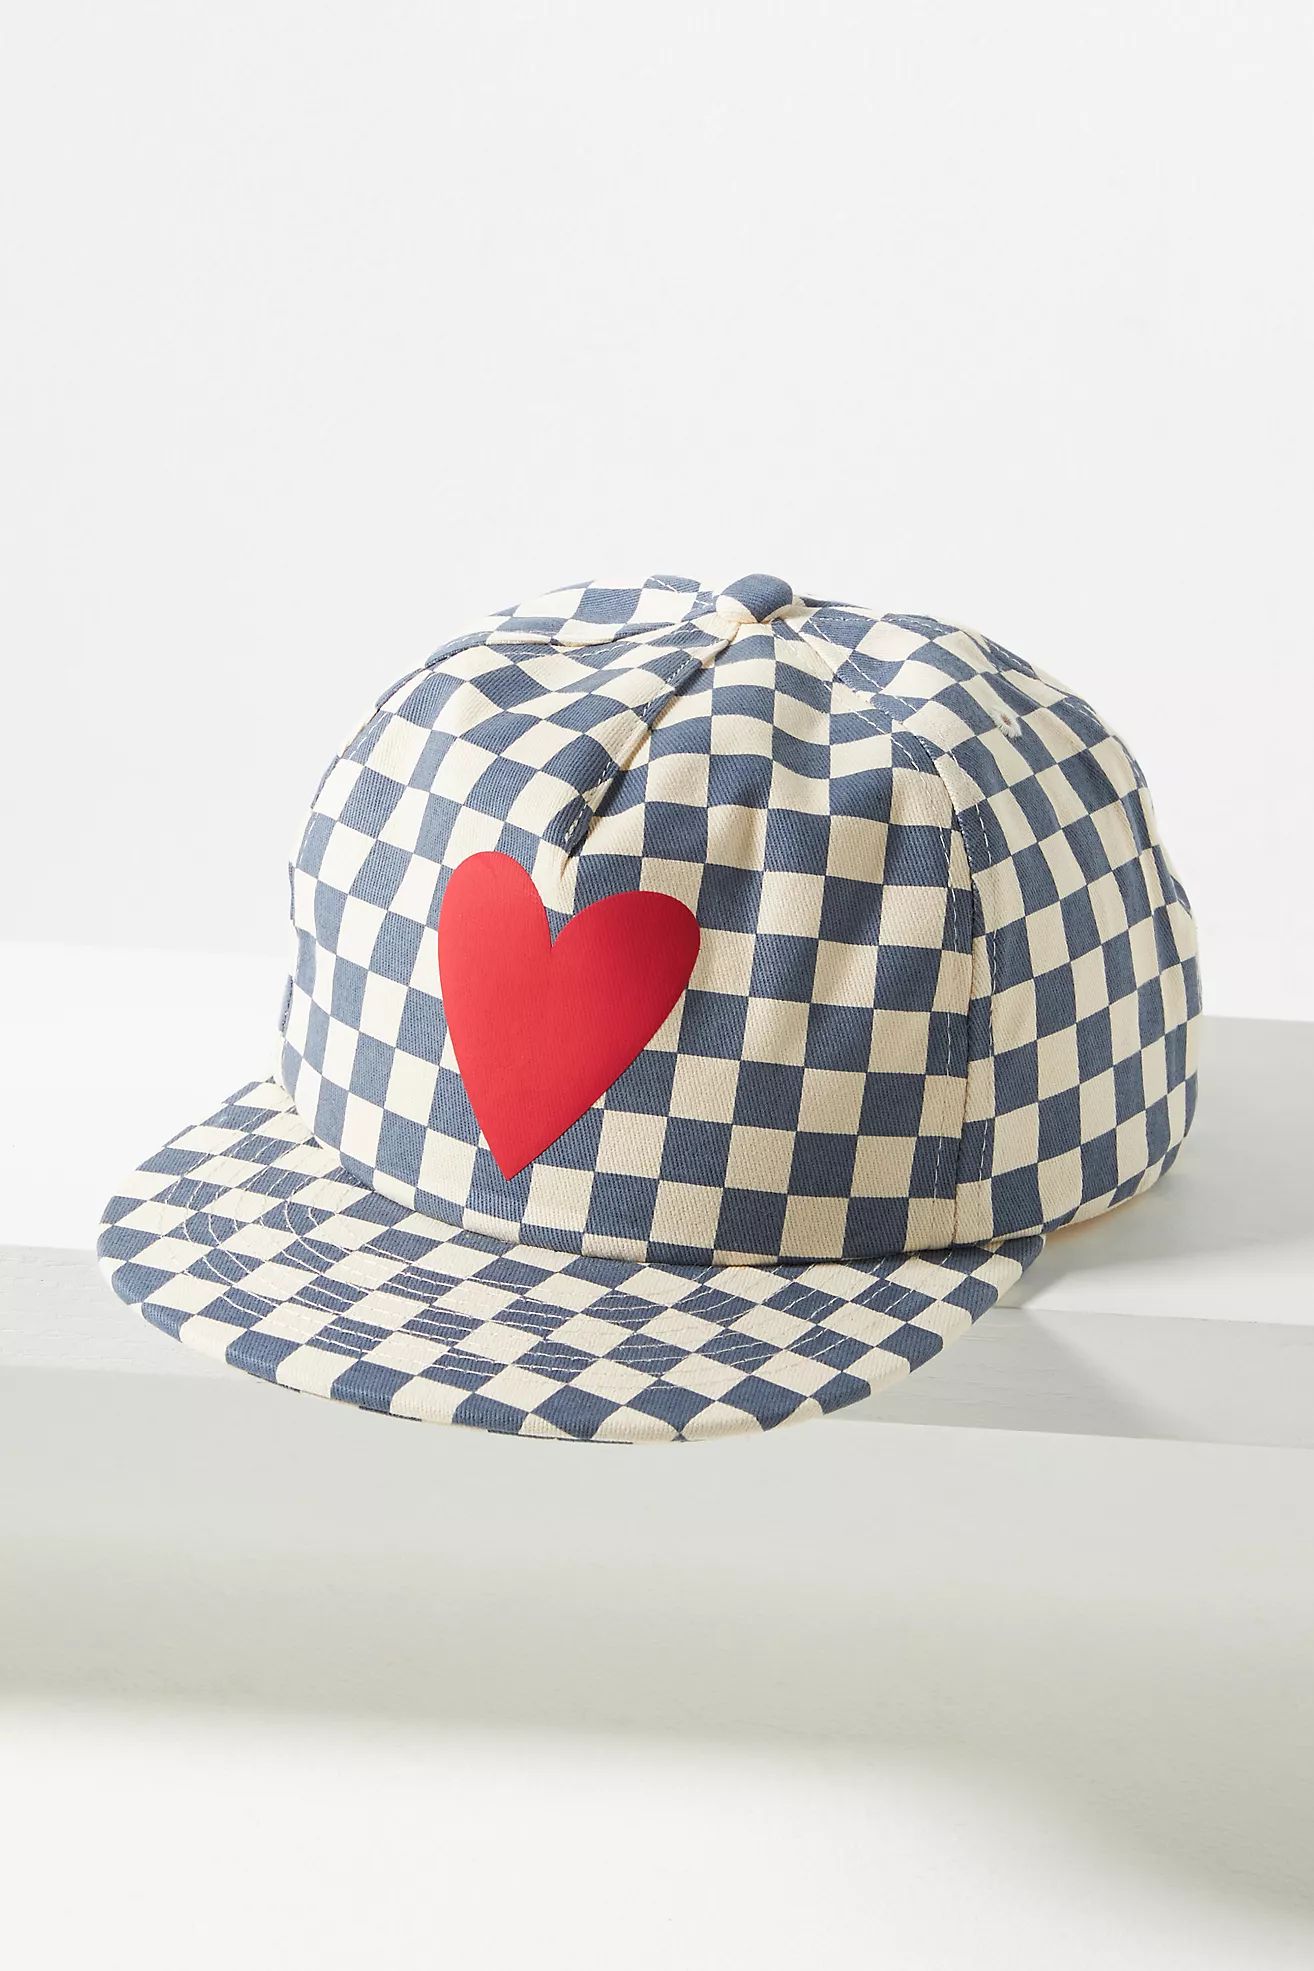 Ascot + Hart Checkered Heart Cap | Anthropologie (US)